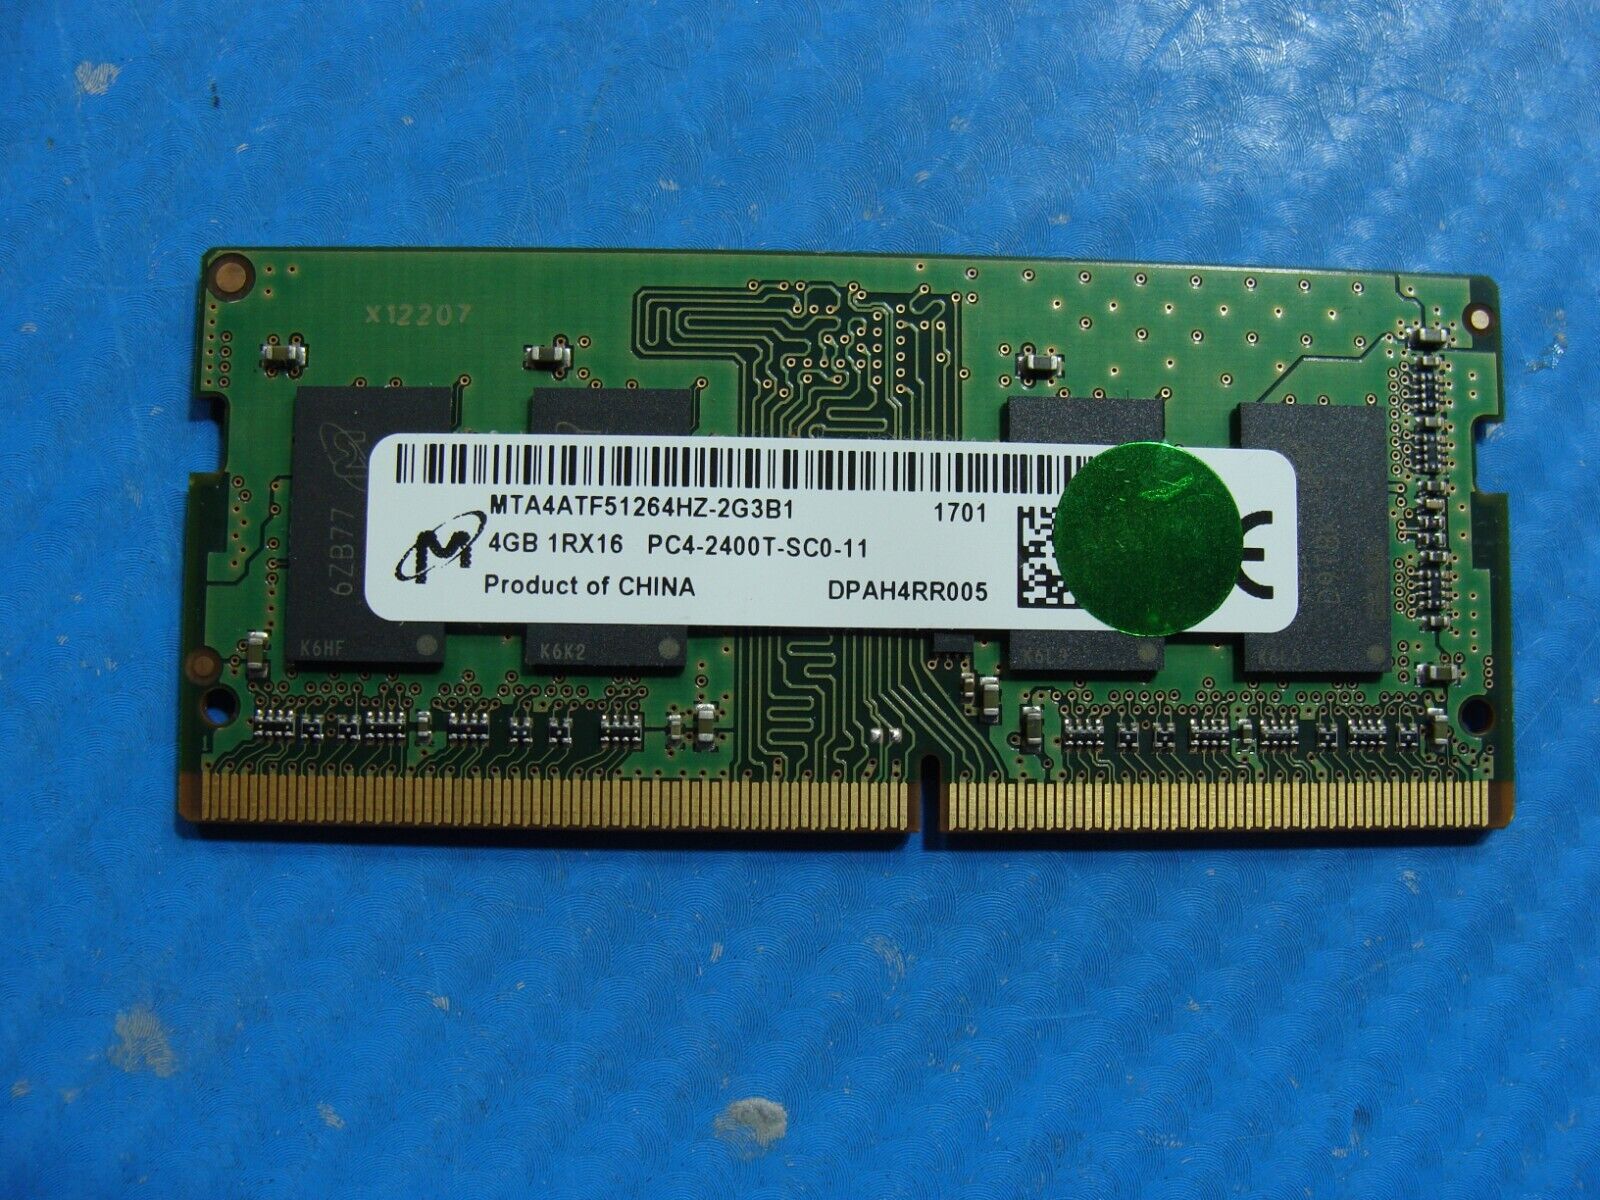 HP m6-aq103dx Micron 4GB 1Rx16 PC4-2400T Memory RAM SO-DIMM MTA4ATF51264HZ-2G3B1